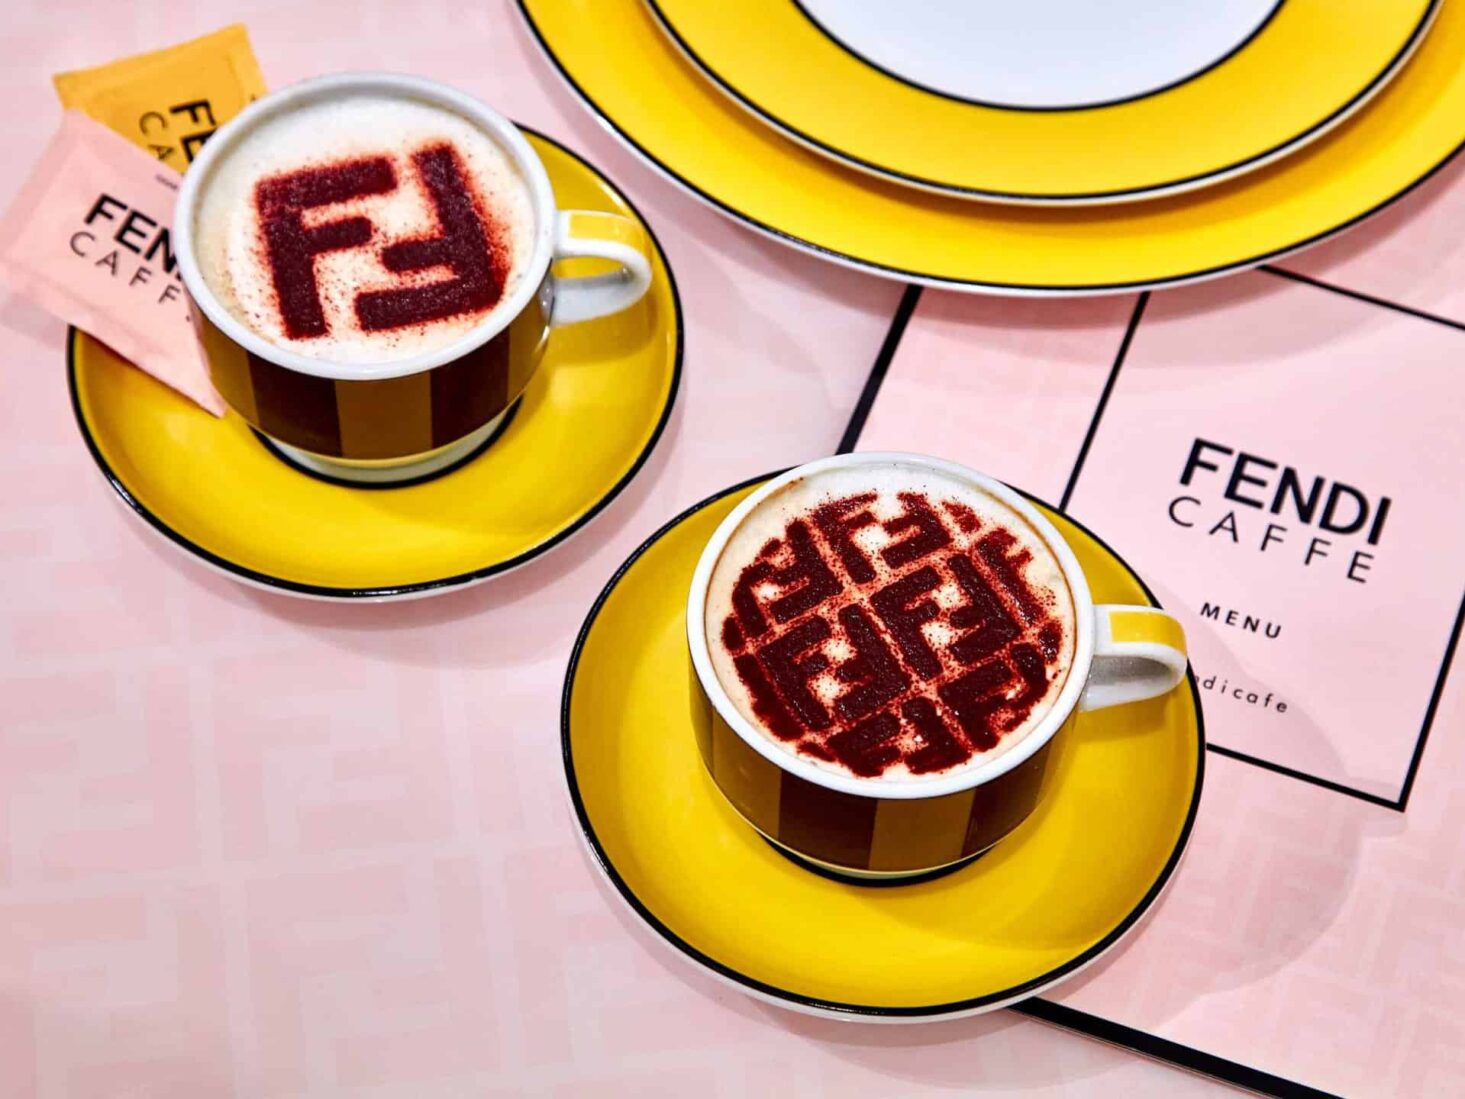 Fendi opens a festive pop-up cafe at Selfridges – Luxury London